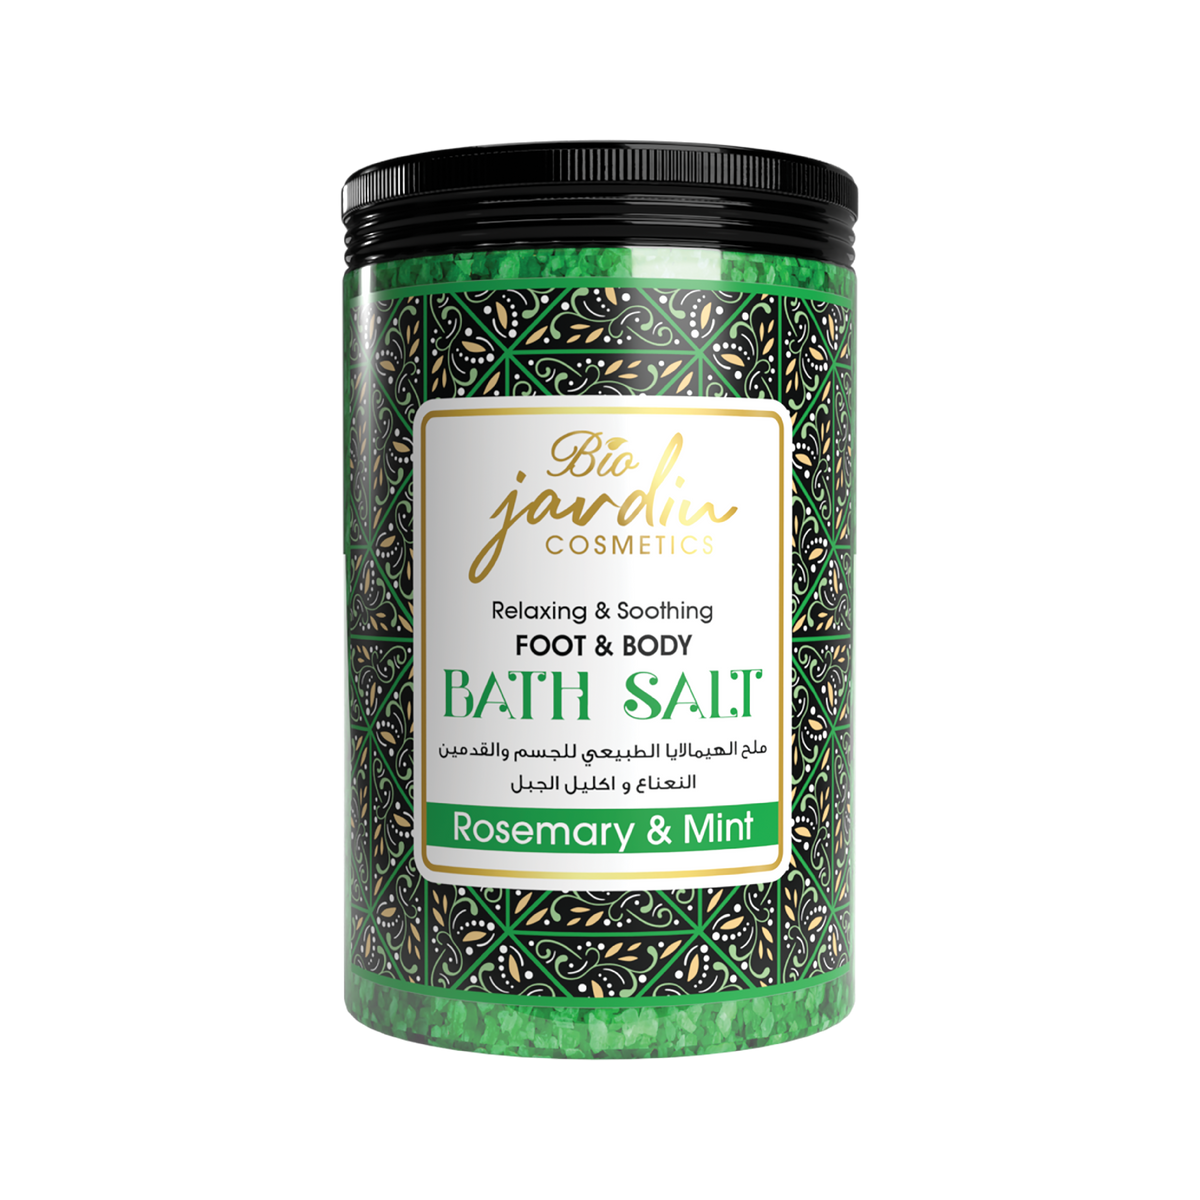 Refreshing Rosemary & Mint Bath Salt